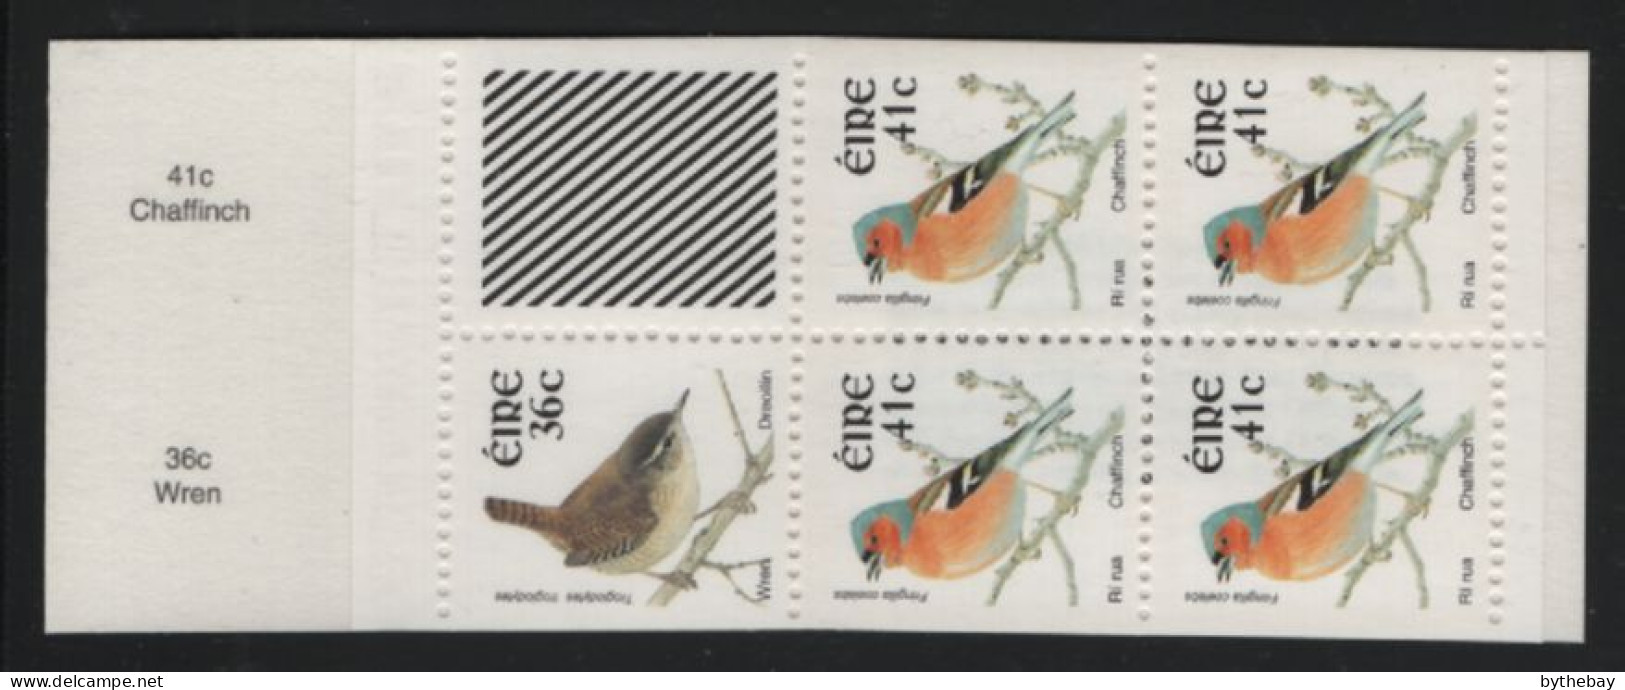 Ireland 2002 MNH Sc 1423a 41c Chatfinch, 36c Wren Booklet - Neufs